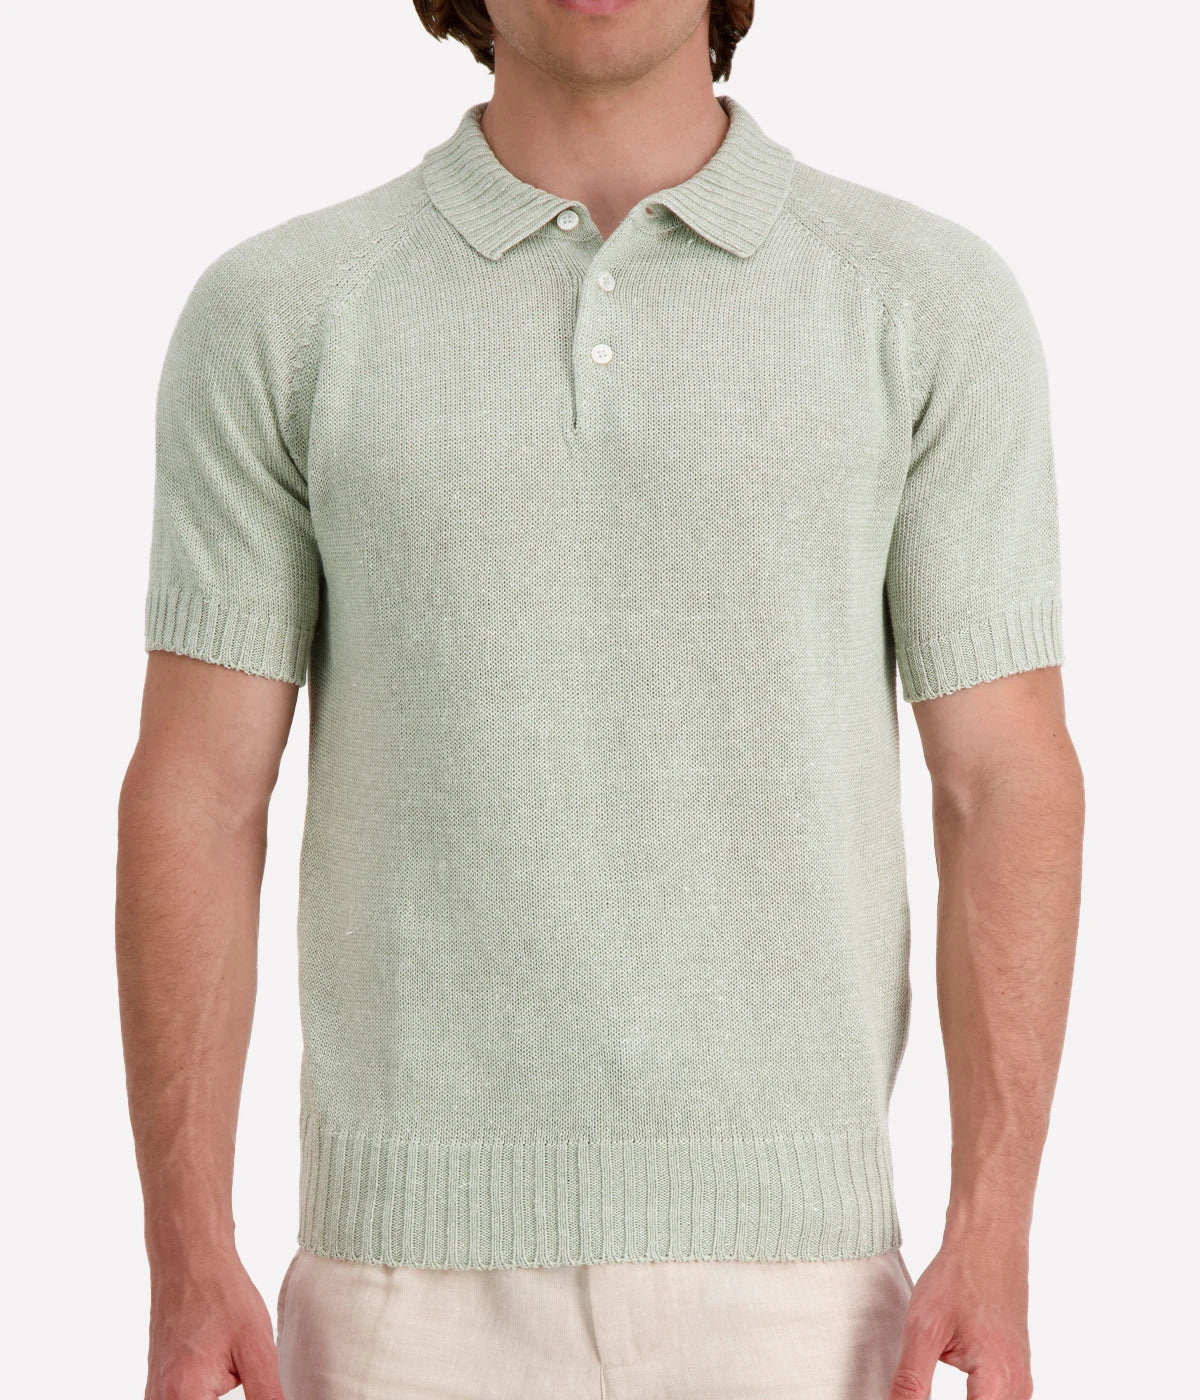 Tennis Short Sleeve Knit Polo in Mint